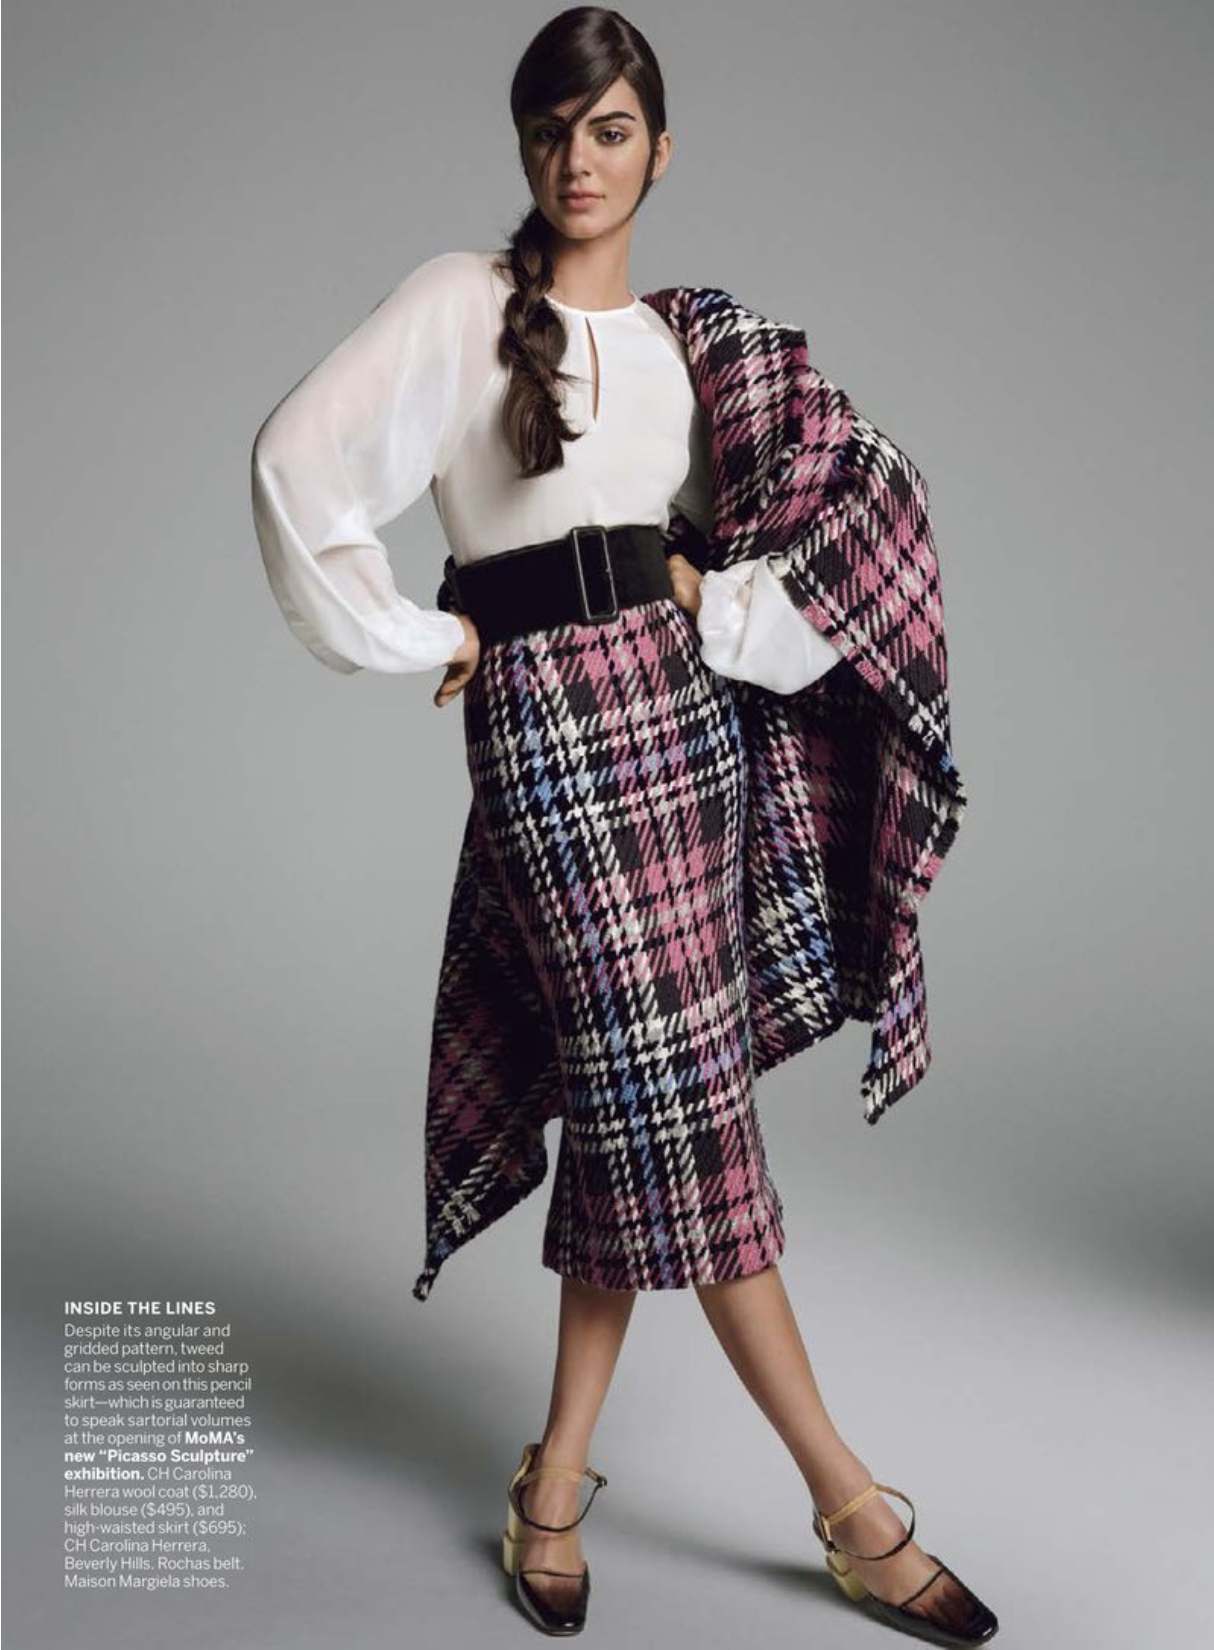 Kendall-Jenner-by-Inez-Vinoodh-Vogue-US-September-2015-00009.png